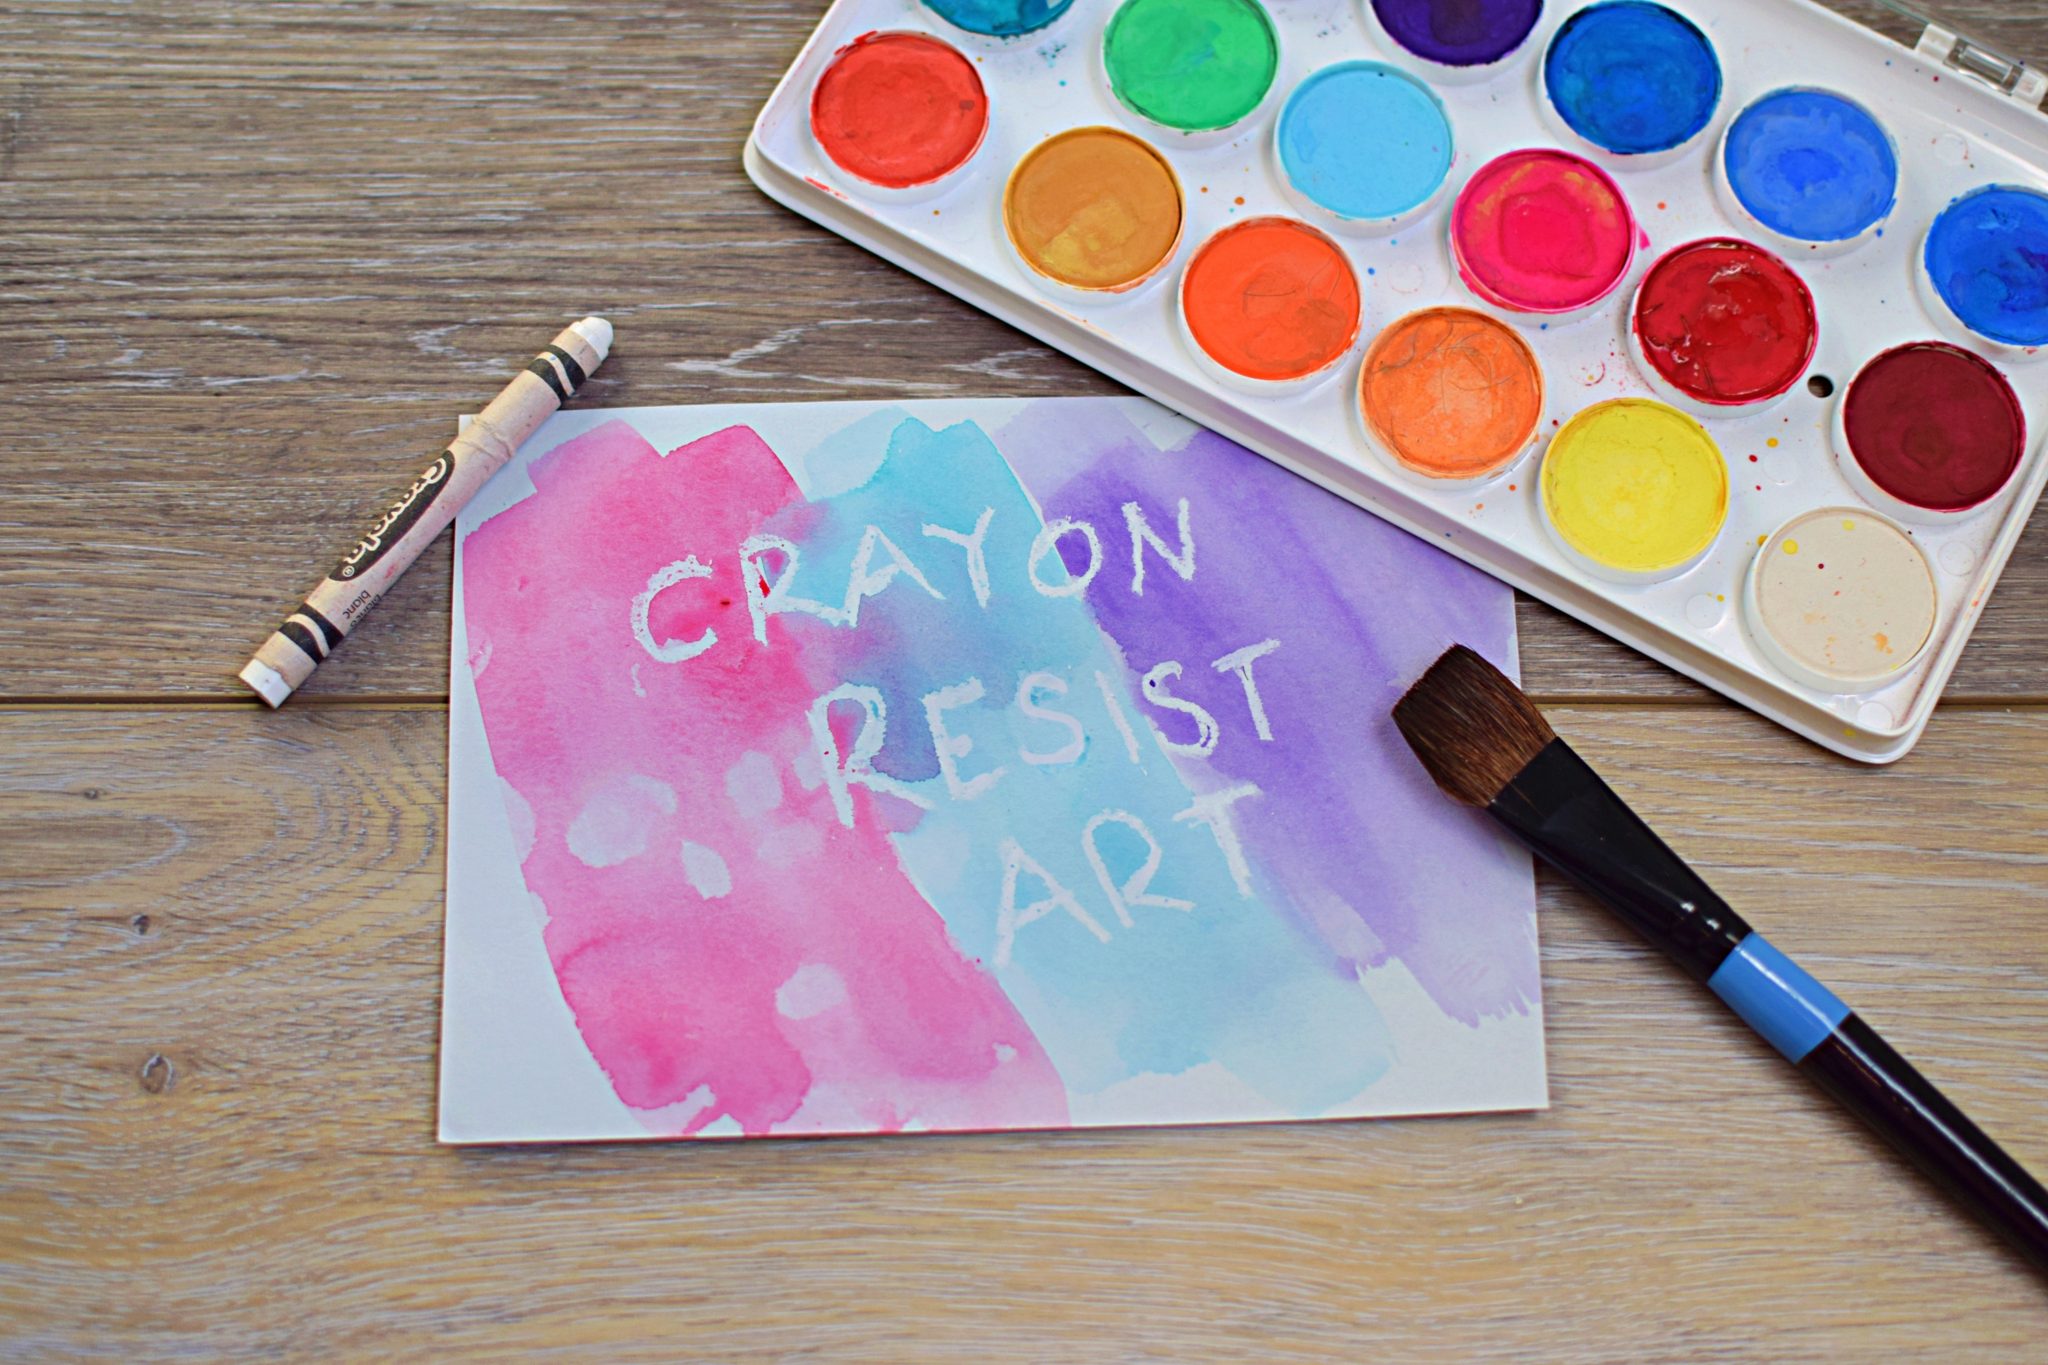 How To Make Crayon Resist Art 2022 - Entertain Your Toddler